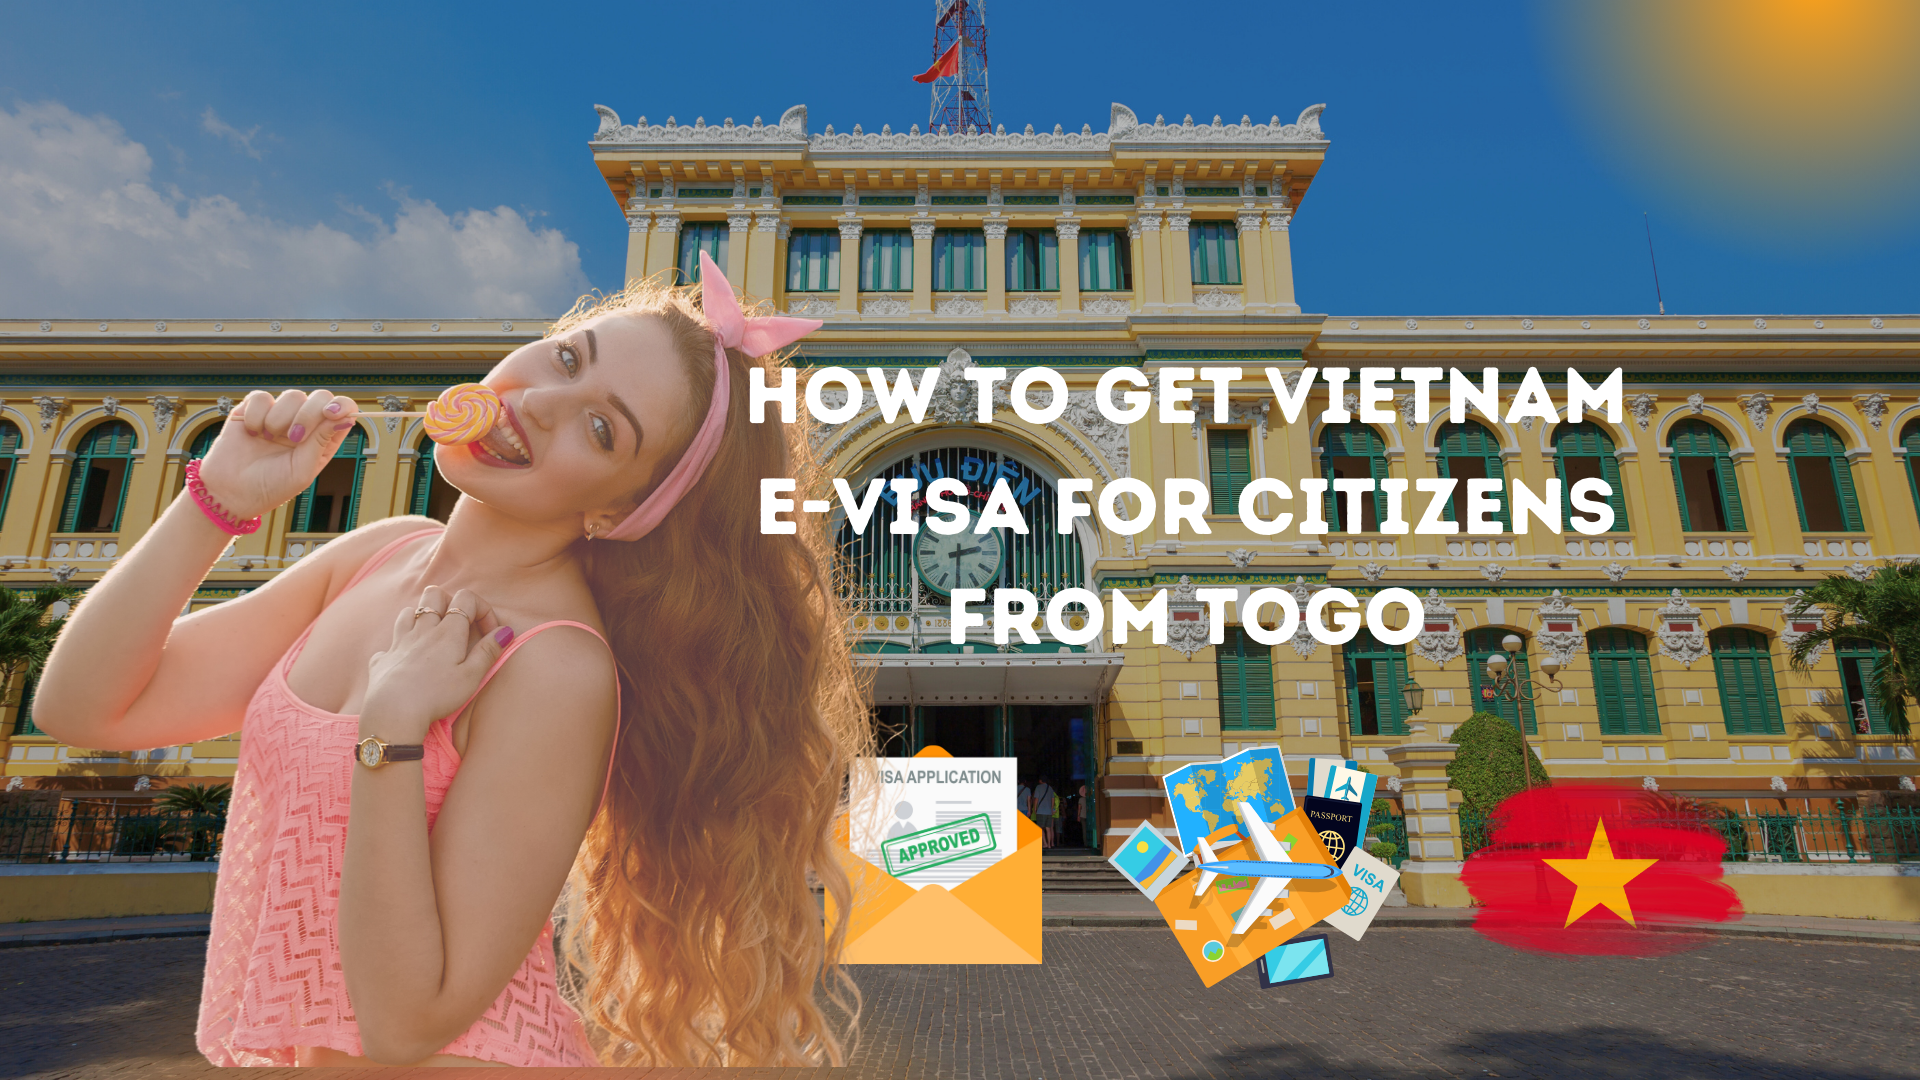 Vietnam Evisa for Citizens from Togo